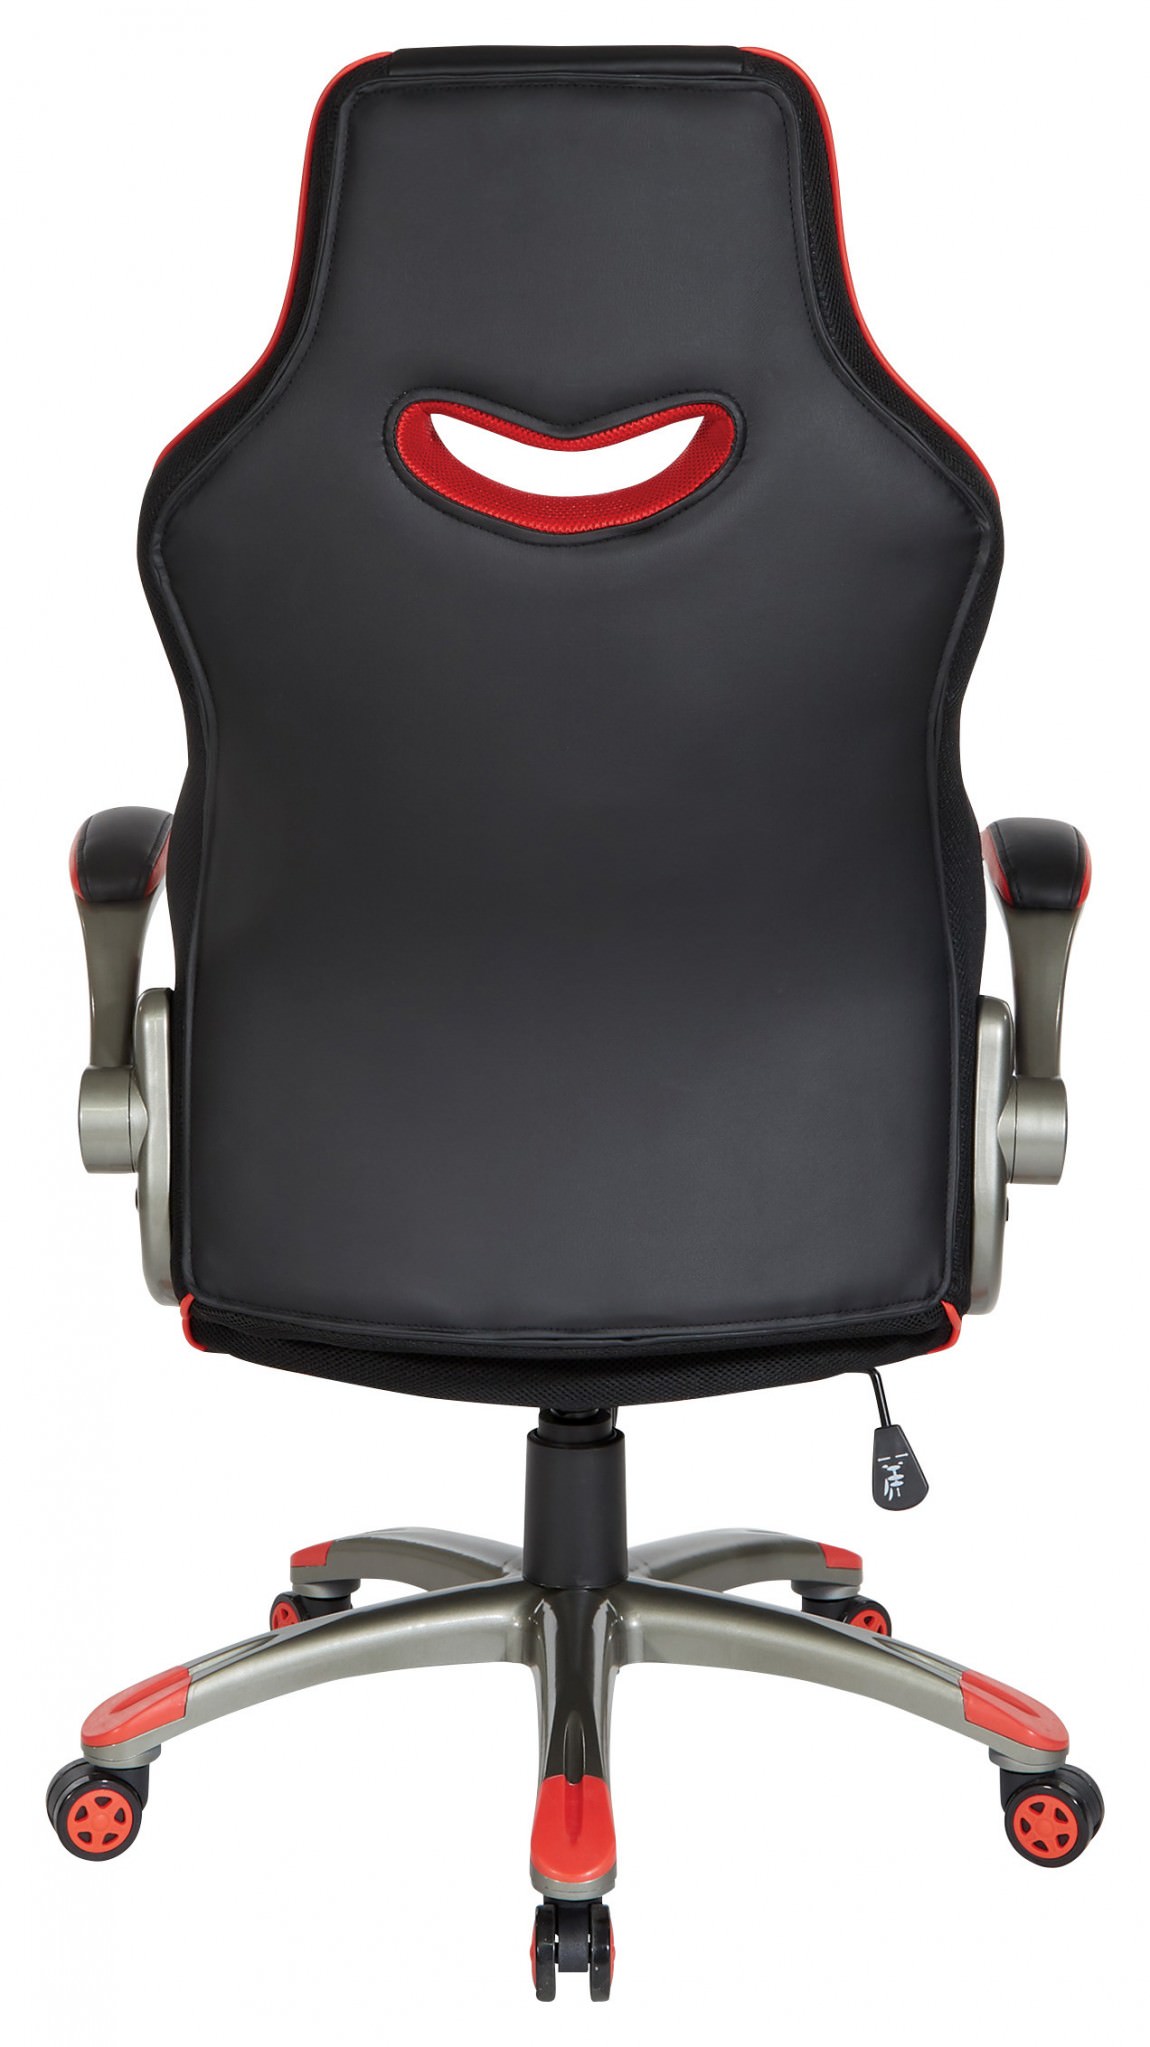 Uplink High Back Gaming Chair